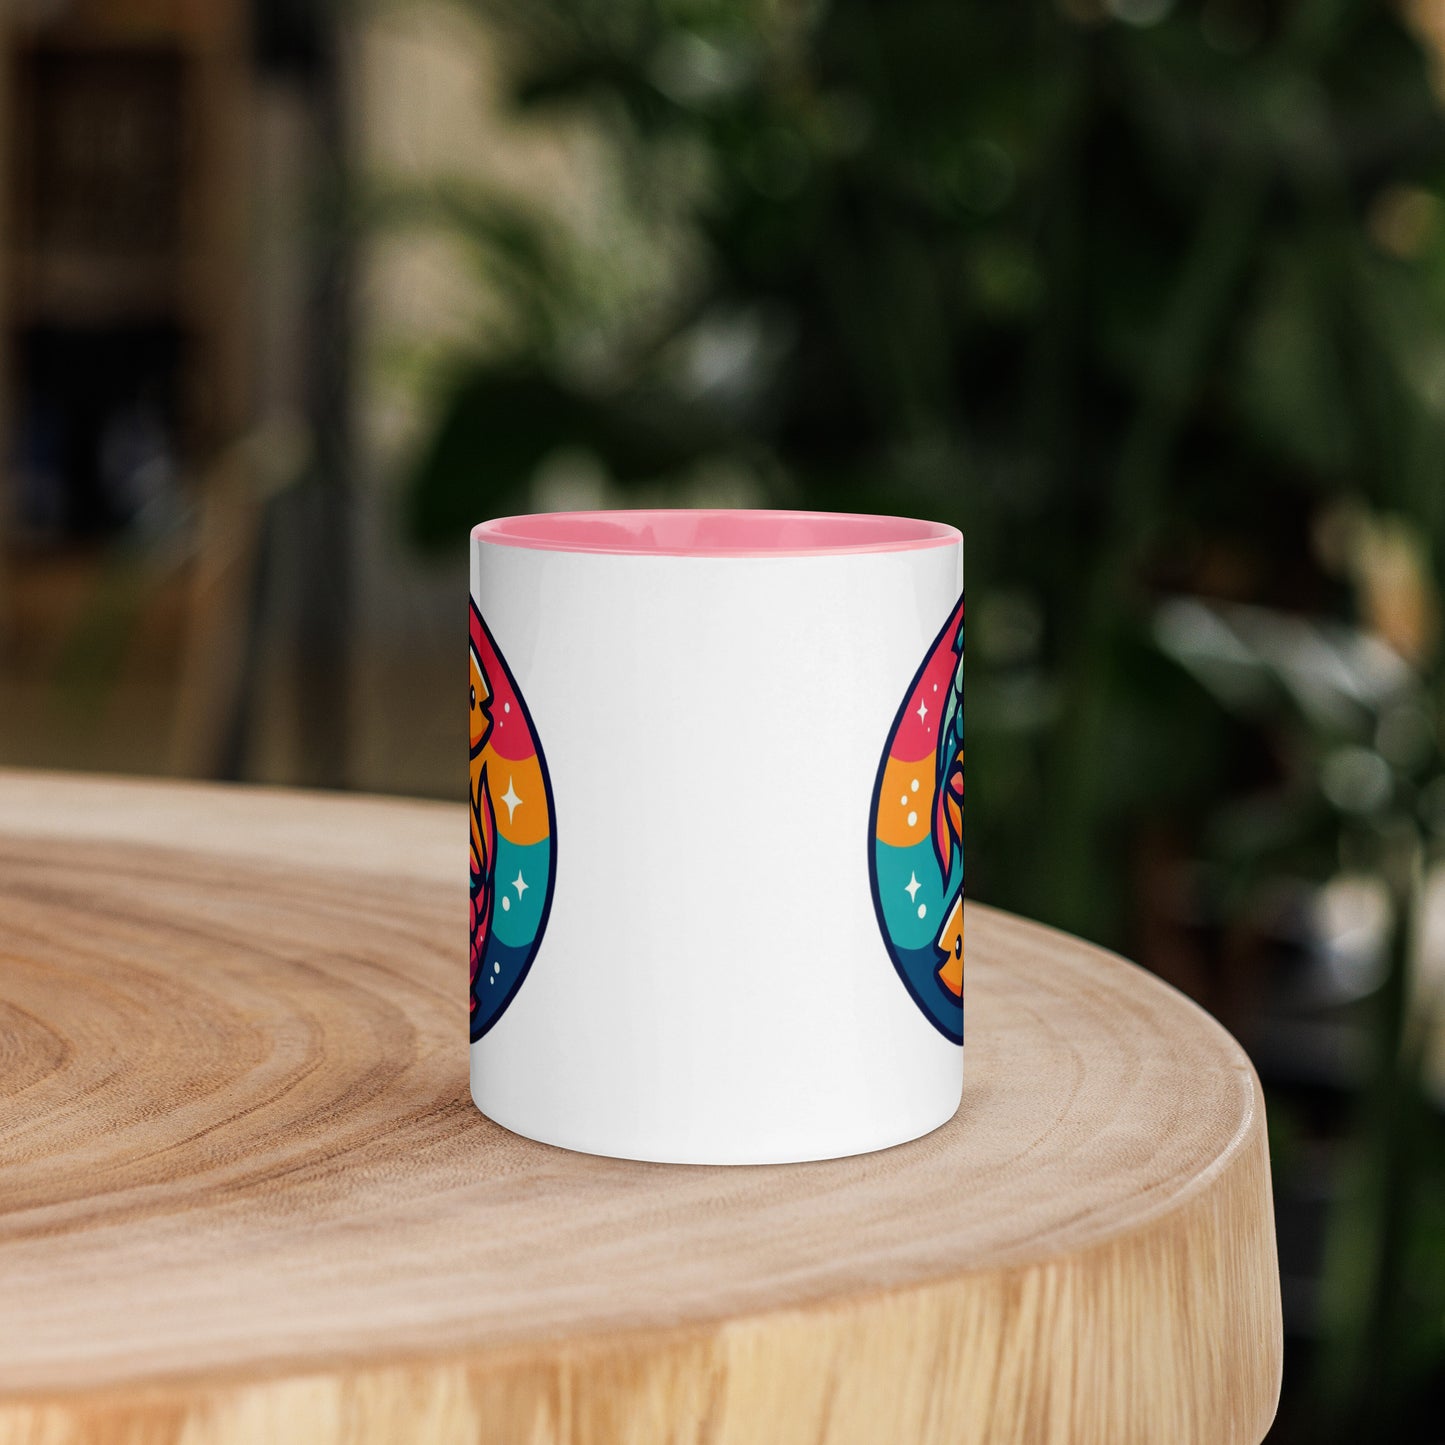 Artifex Mug with Color Inside